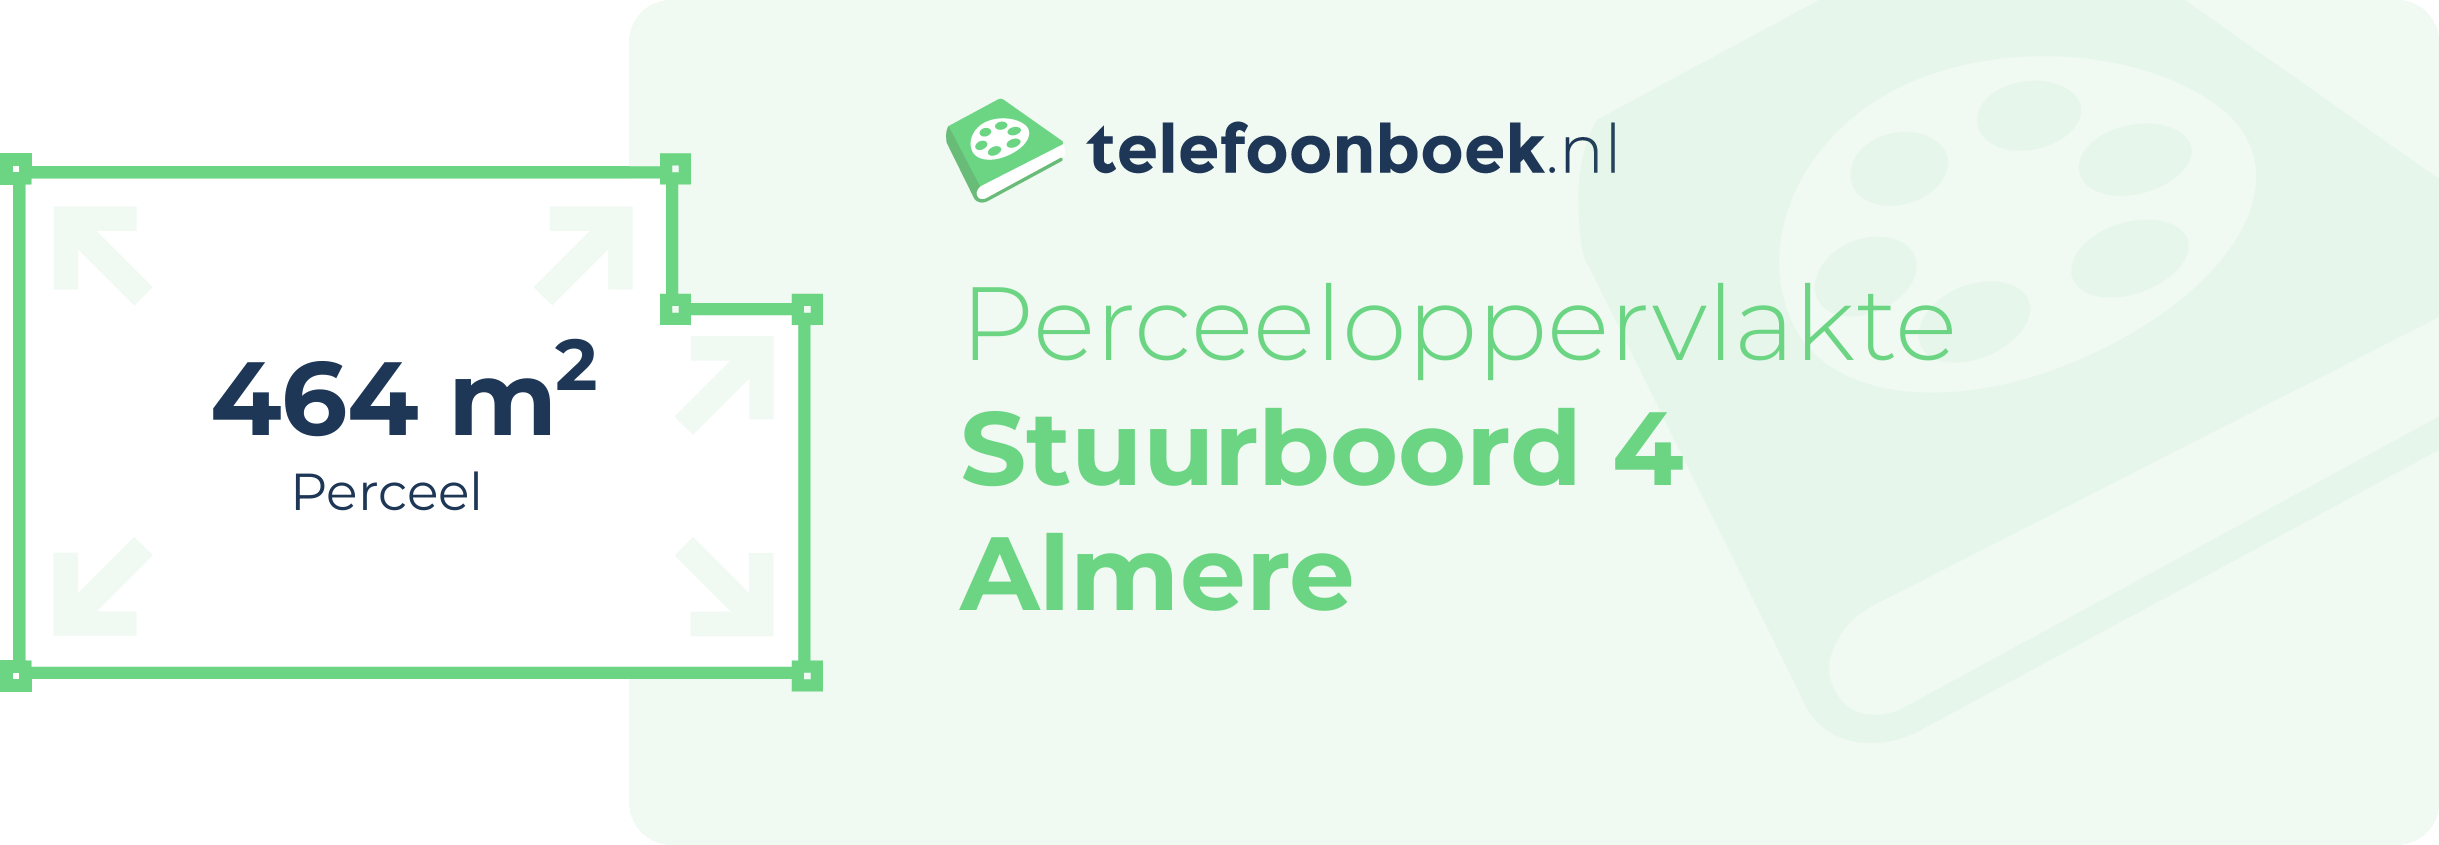 Perceeloppervlakte Stuurboord 4 Almere